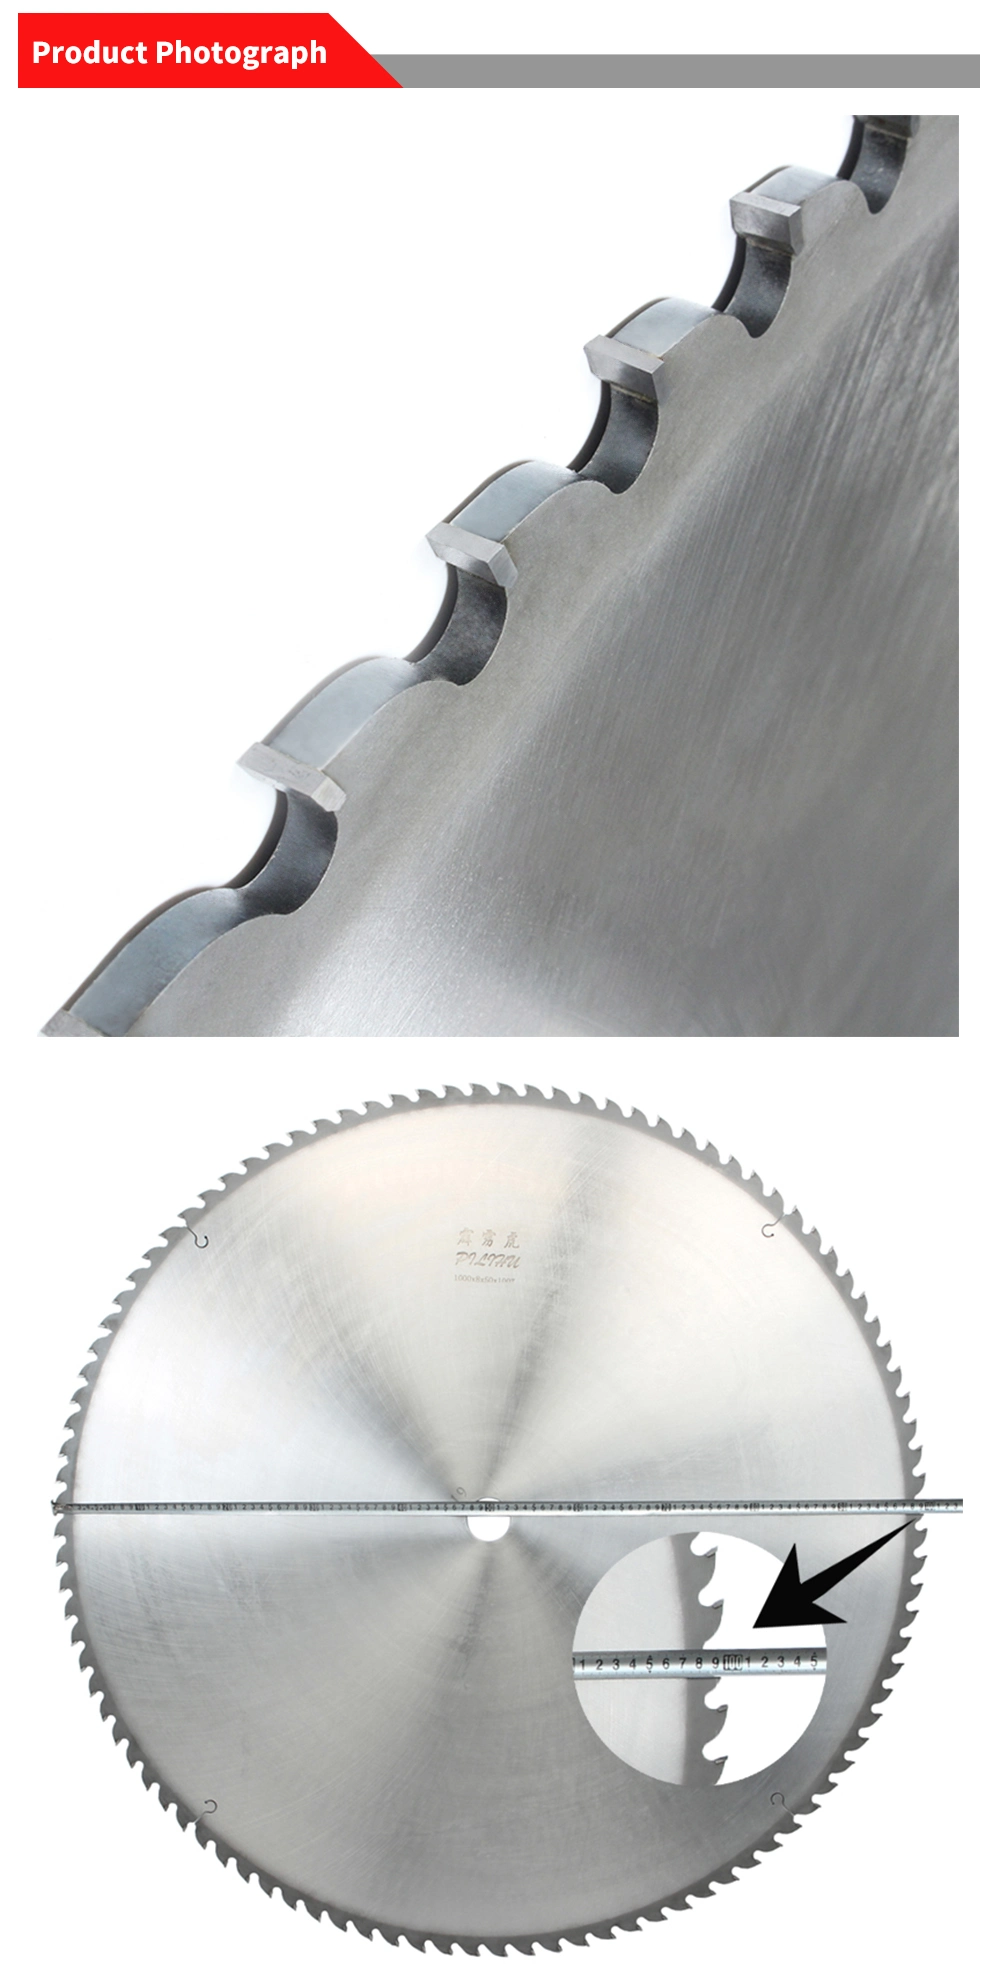 Pilihu Big Size 24inch Tct Circular Carbide Tip Saw Blade for Wood Cutting